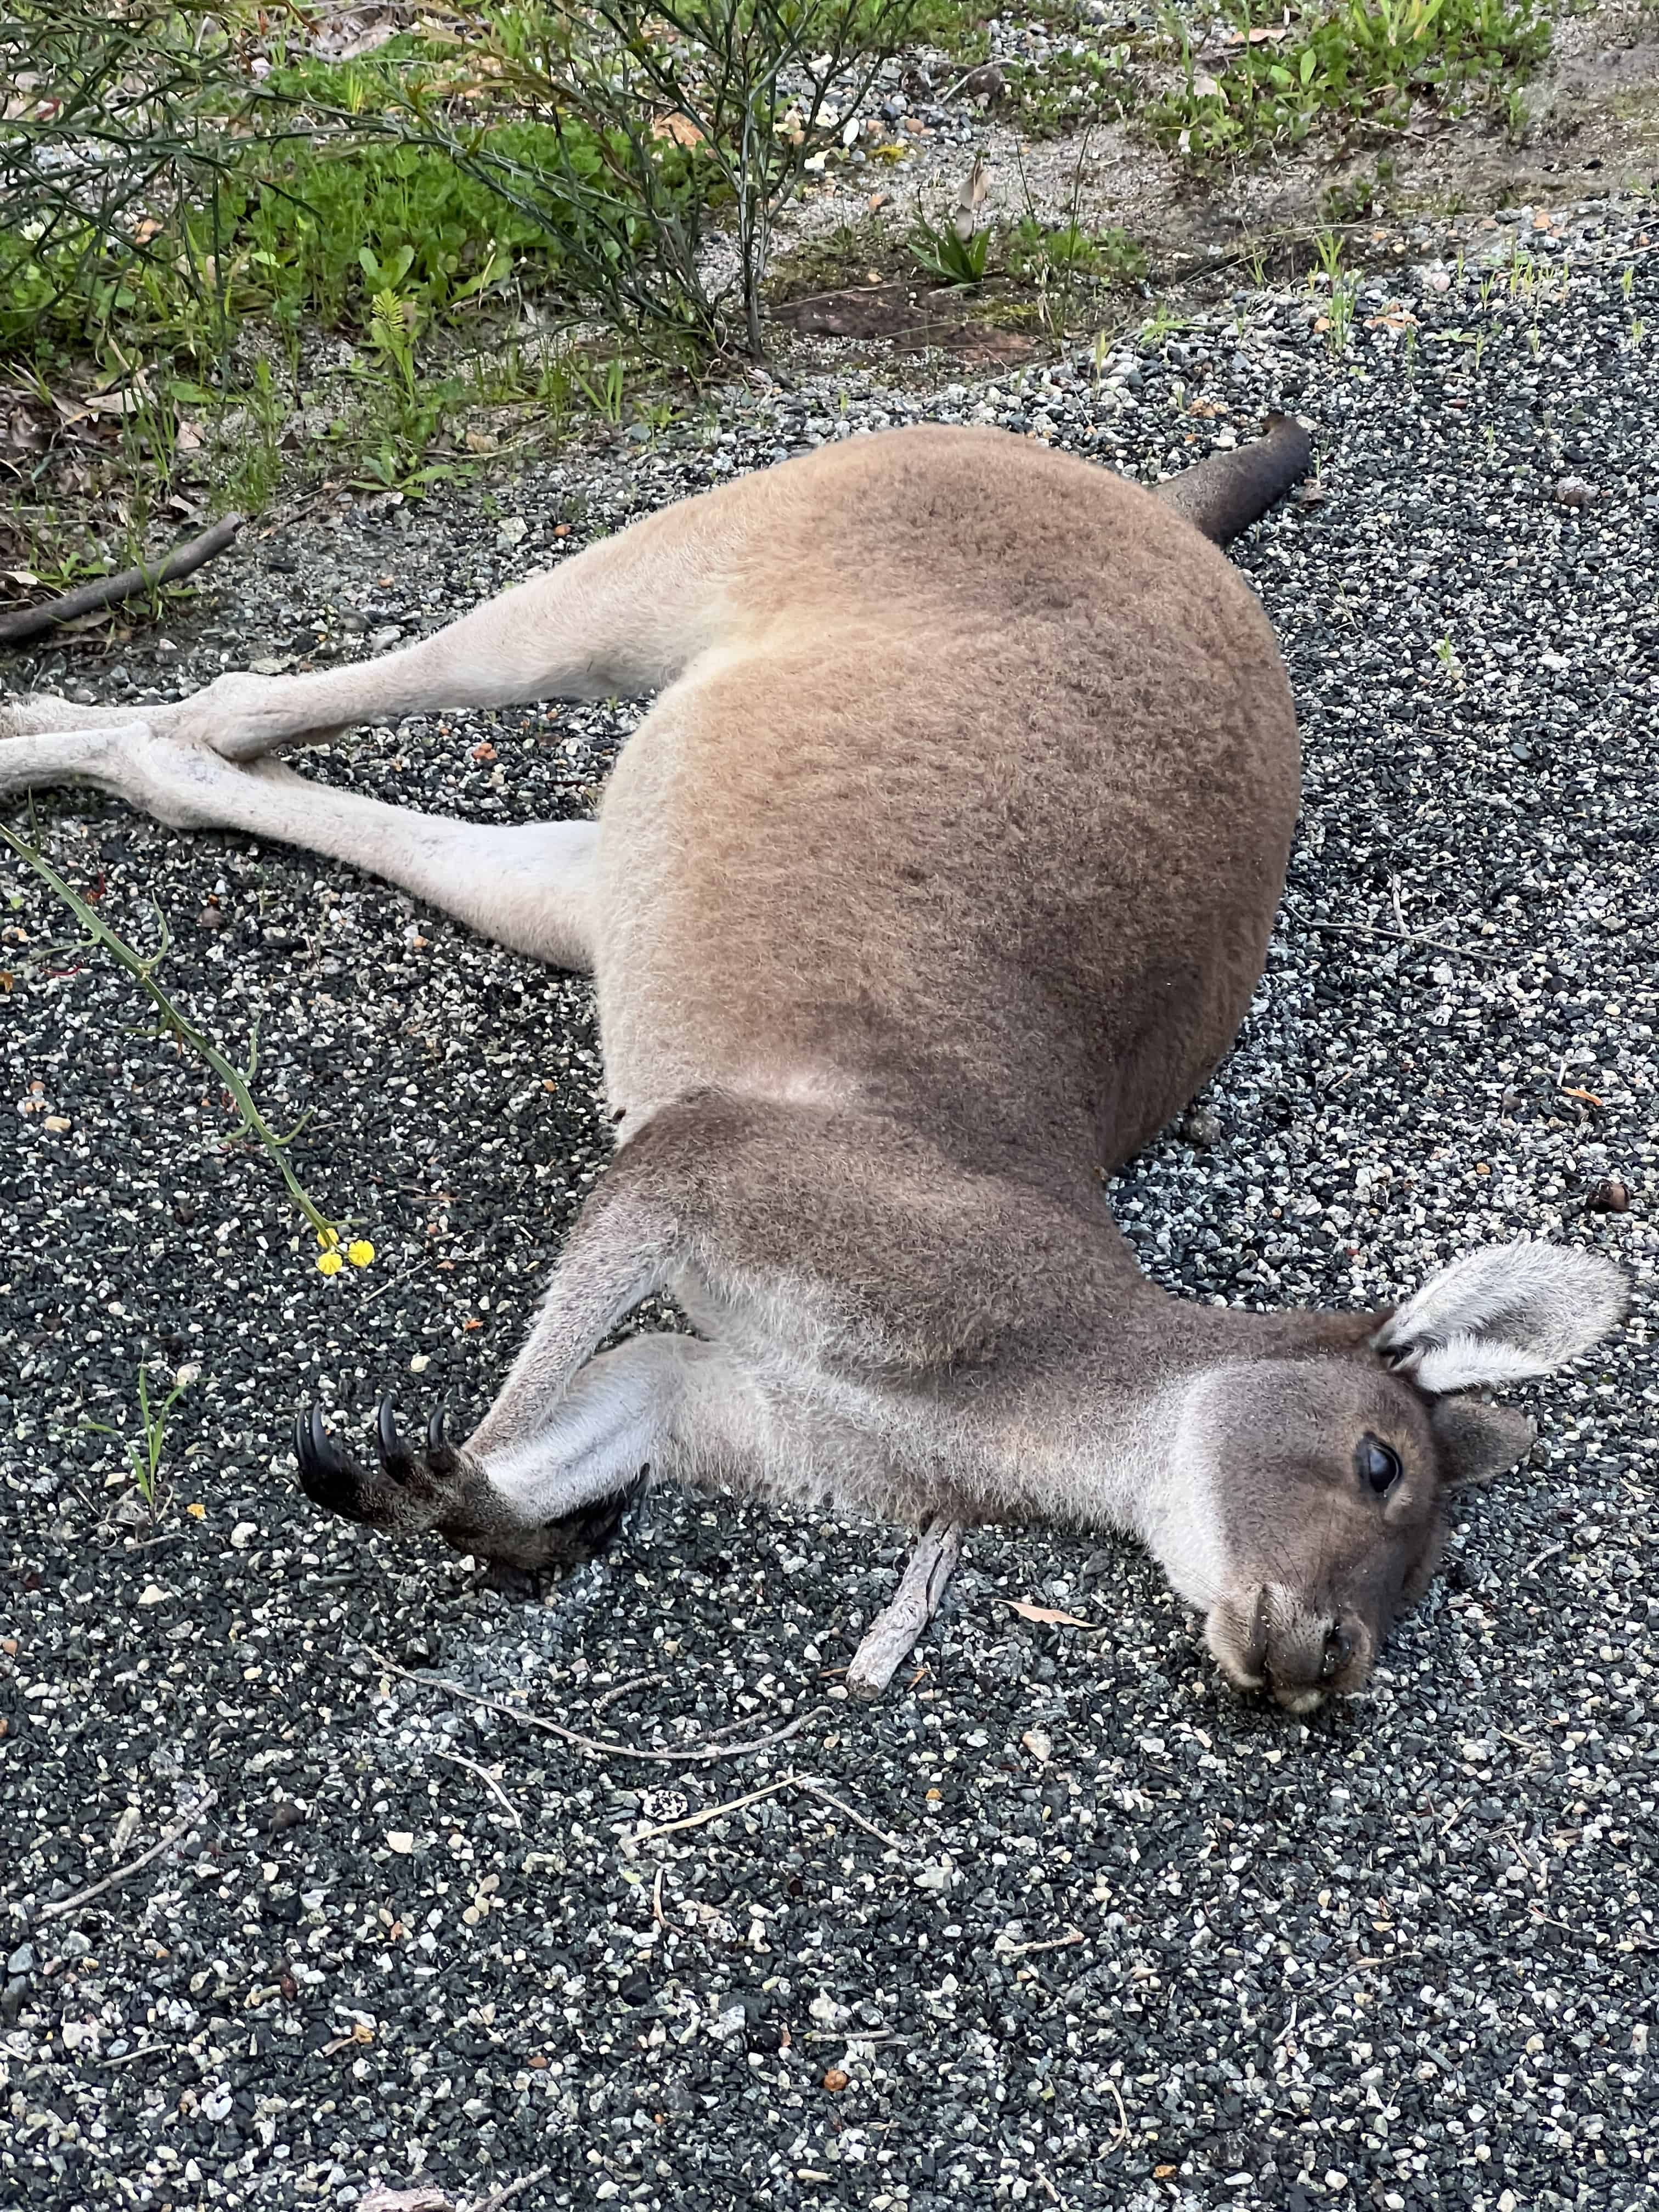 Dead adult kangaroo, lying sideways on a road